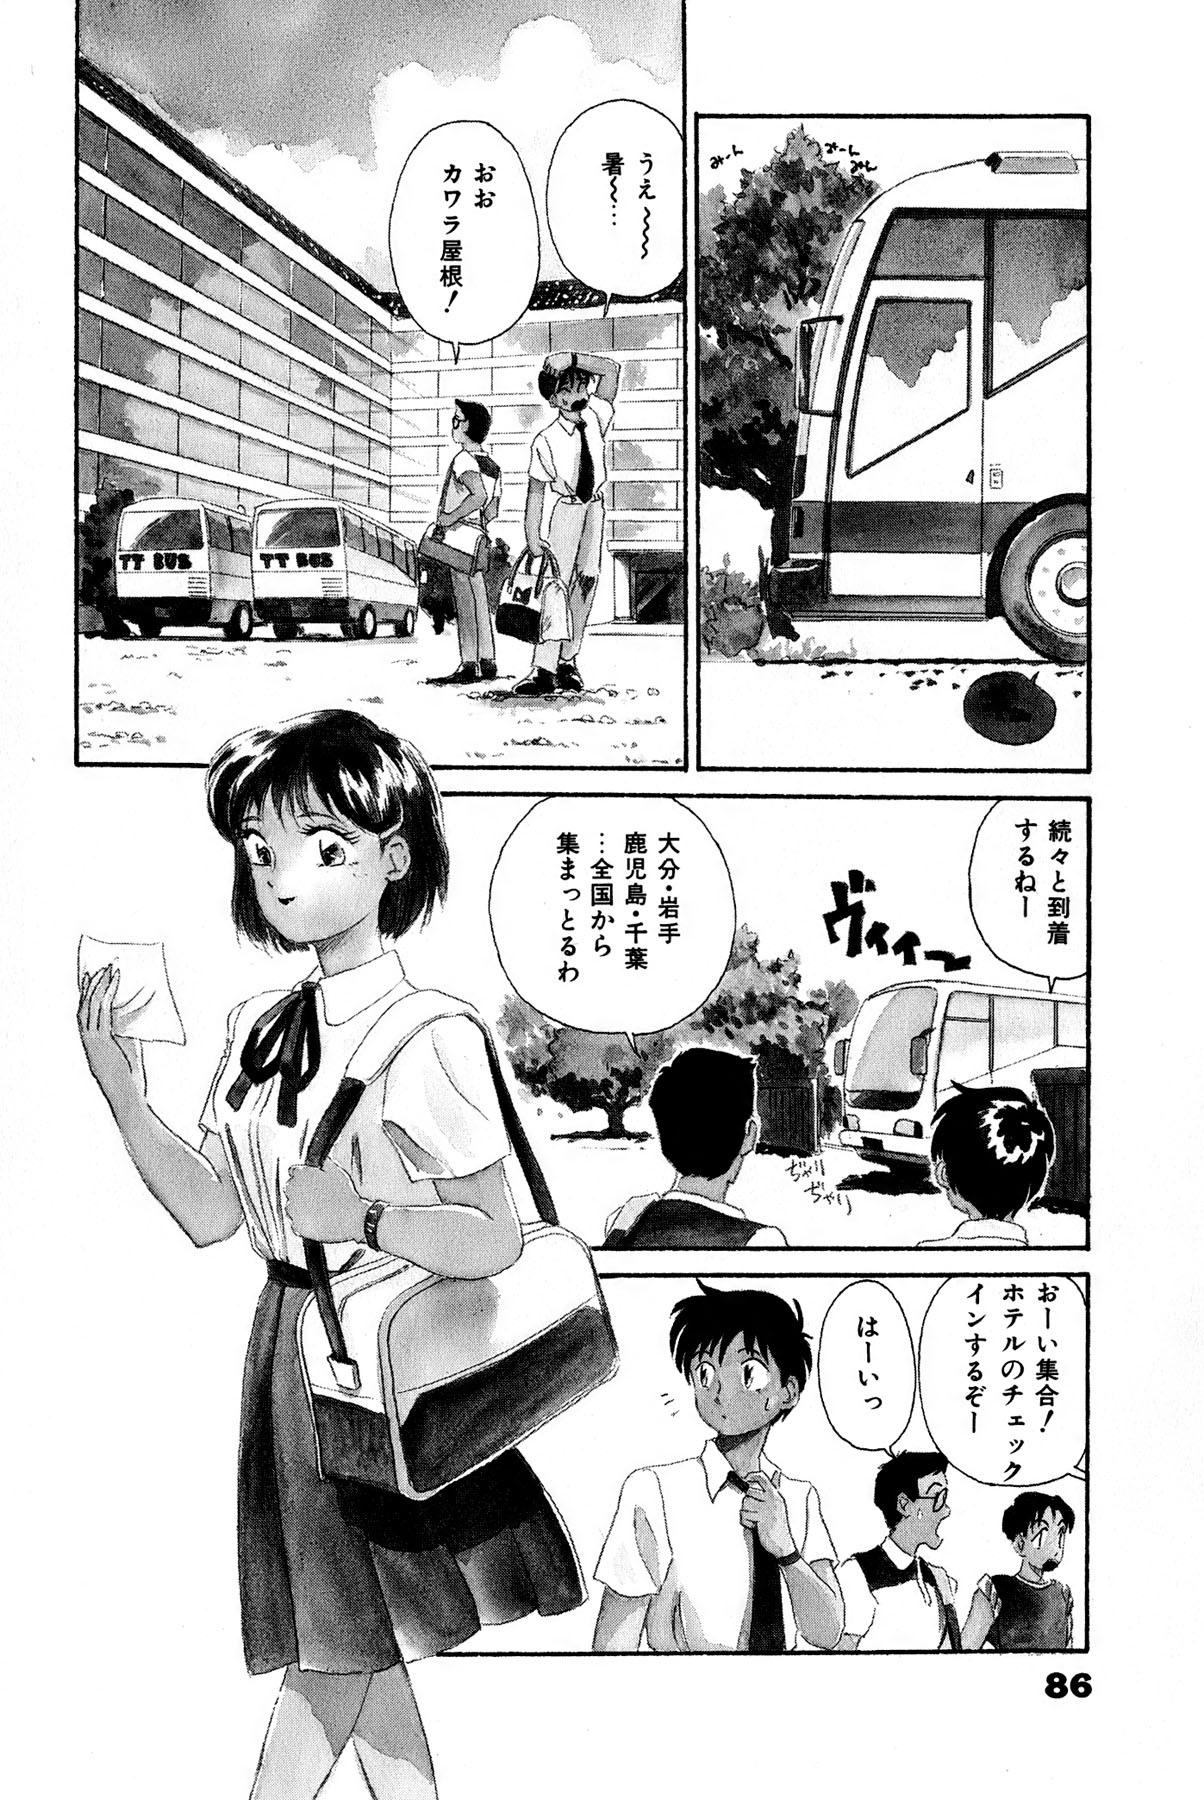 Otakara Comic 86